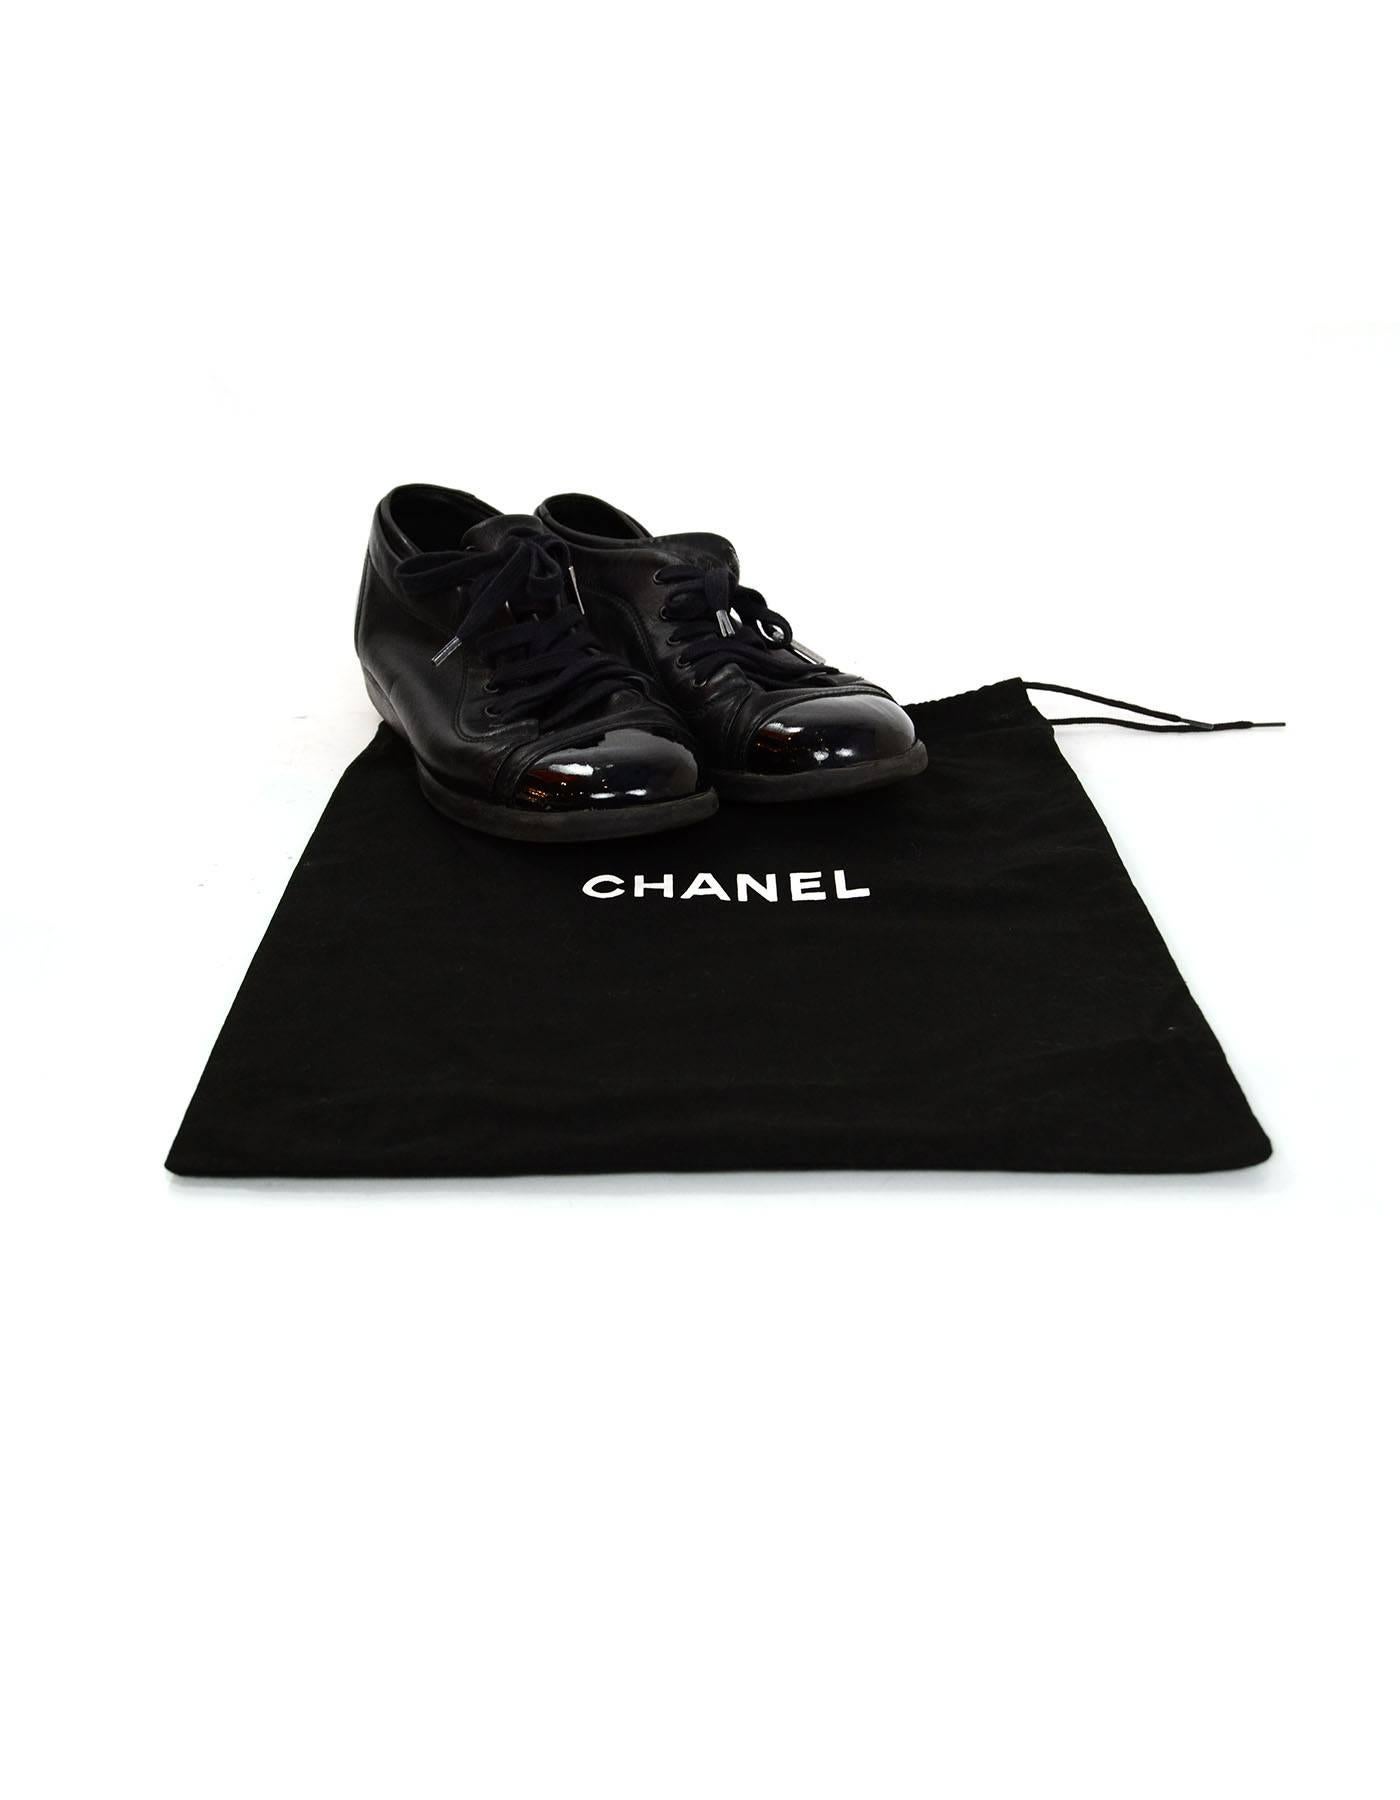 Chanel Black Leather CC Sneakers sz 38 w/DB 3